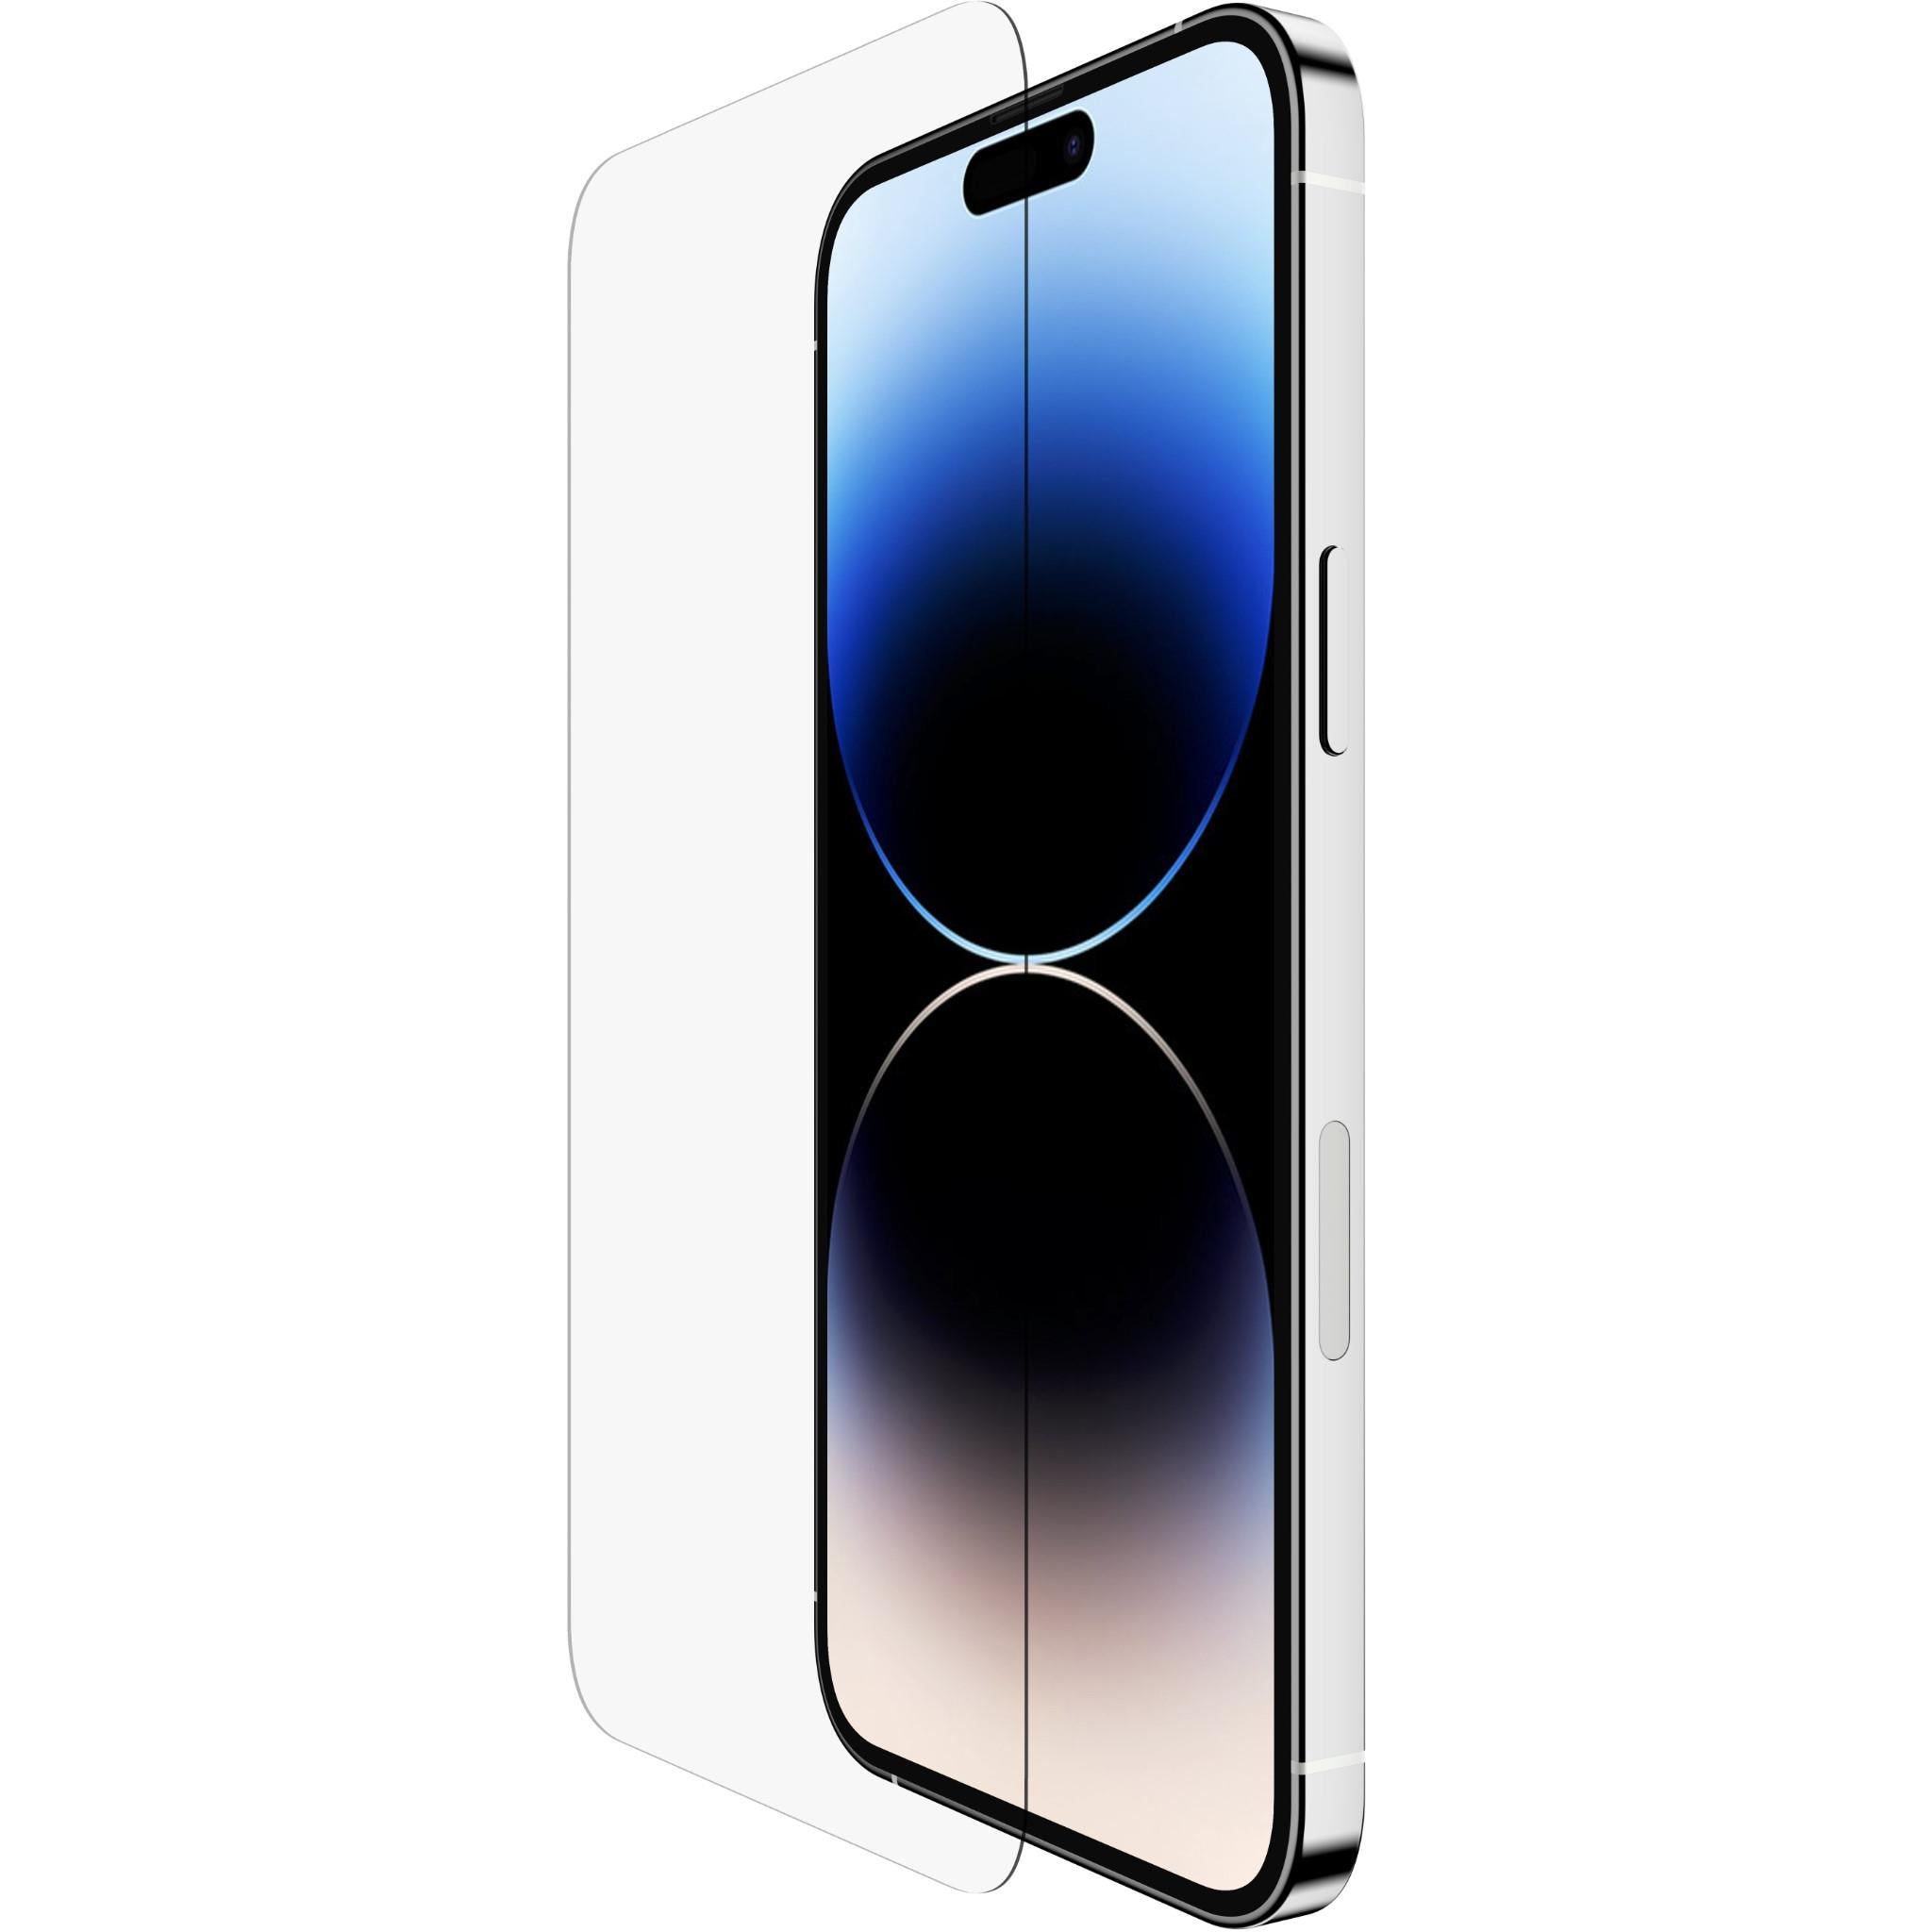 Belkin UltraGlass Screen Protector for iPhone 12